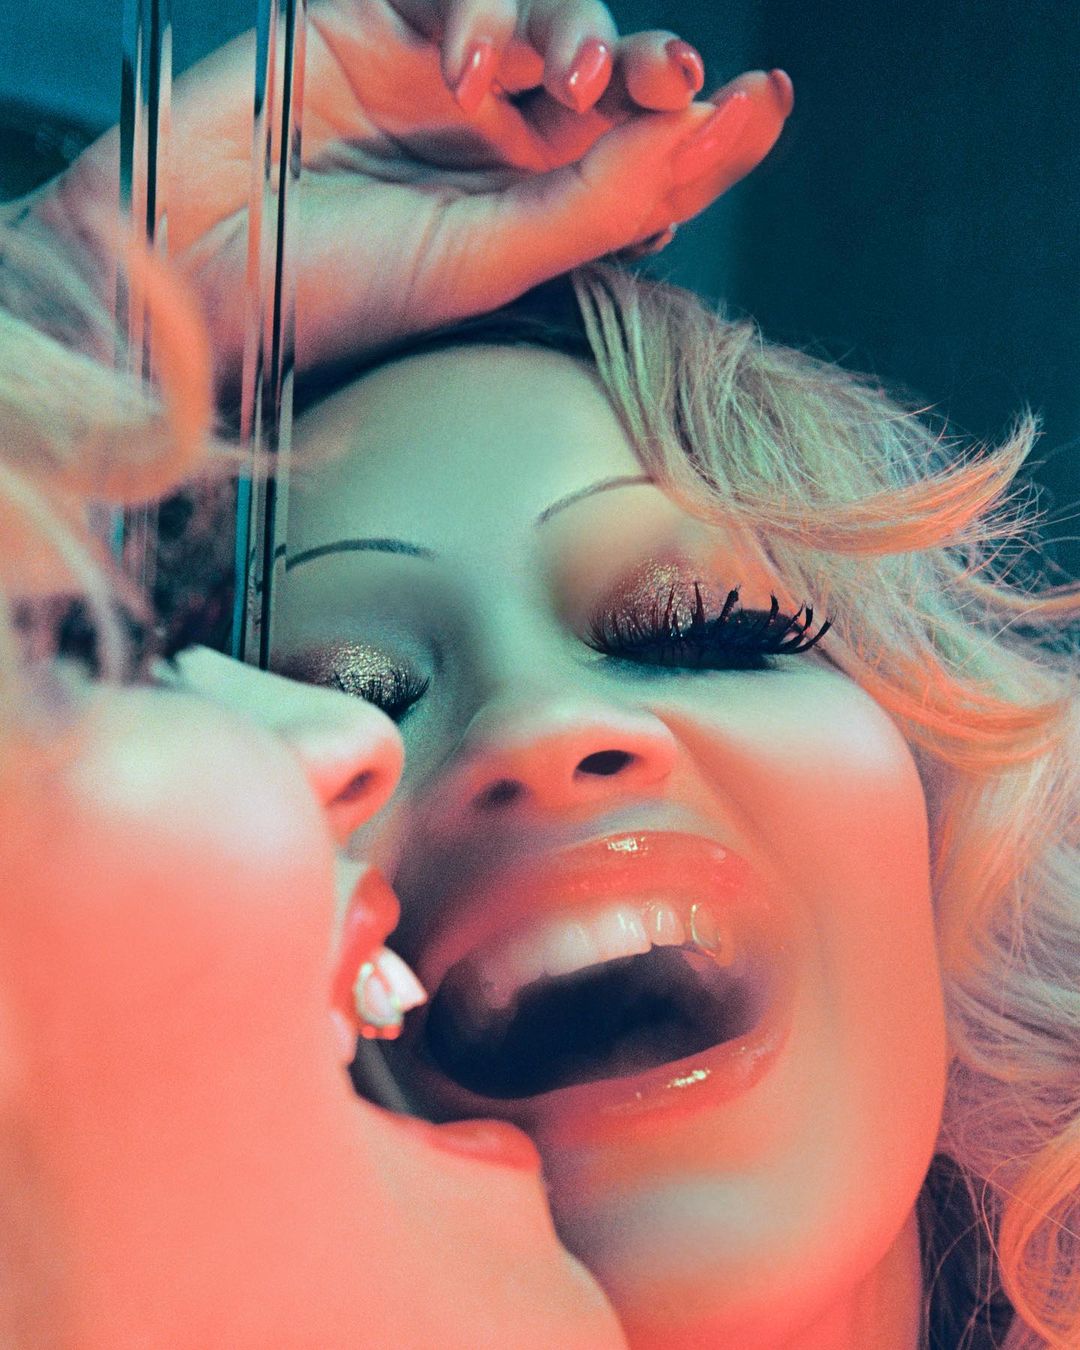 Photos n°10 : Rita Ora Wants To Get You Drunk!